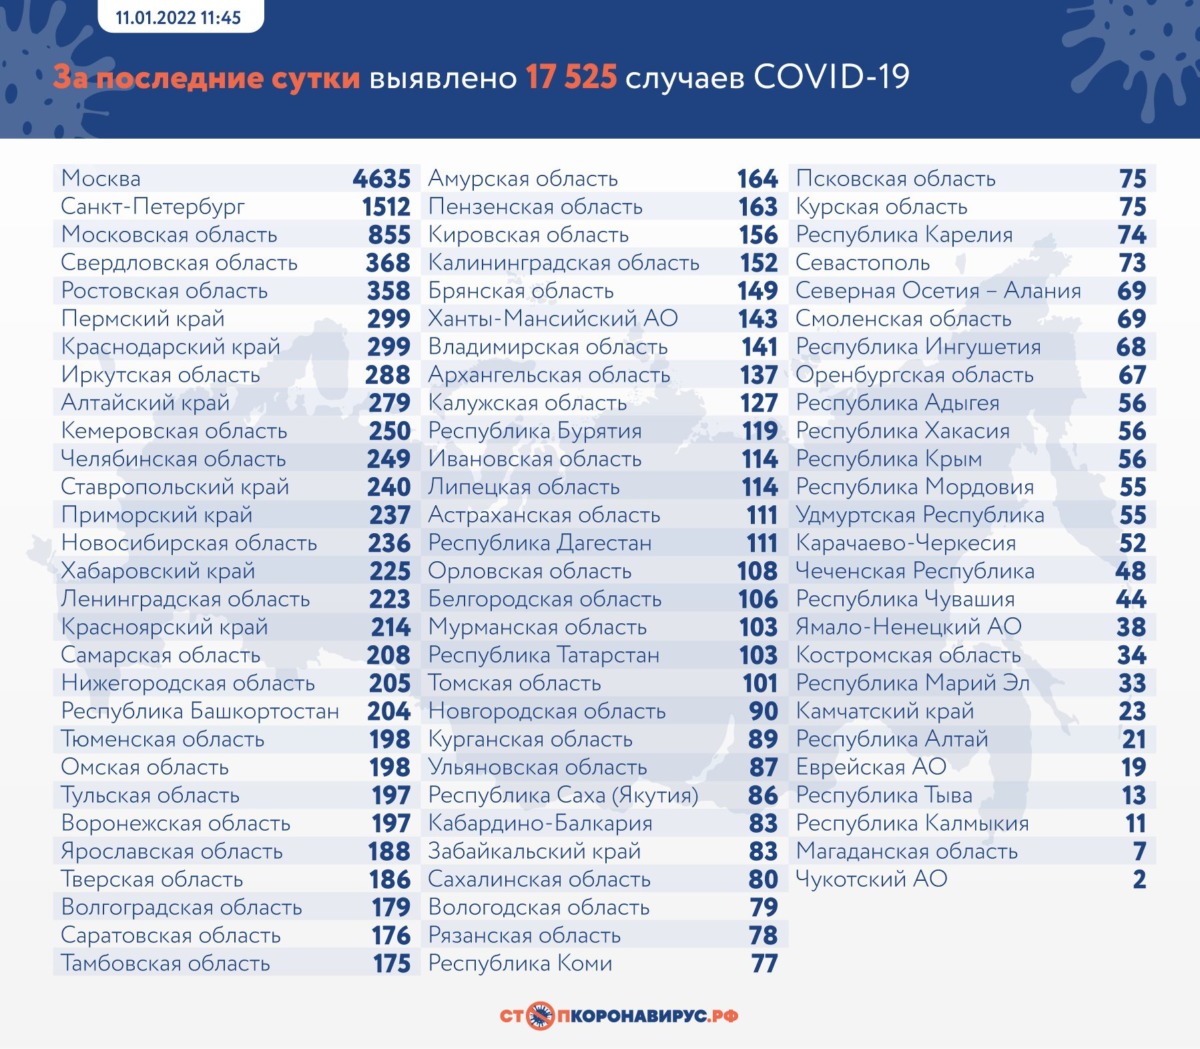 Статистика коронавируса в России на 11 января